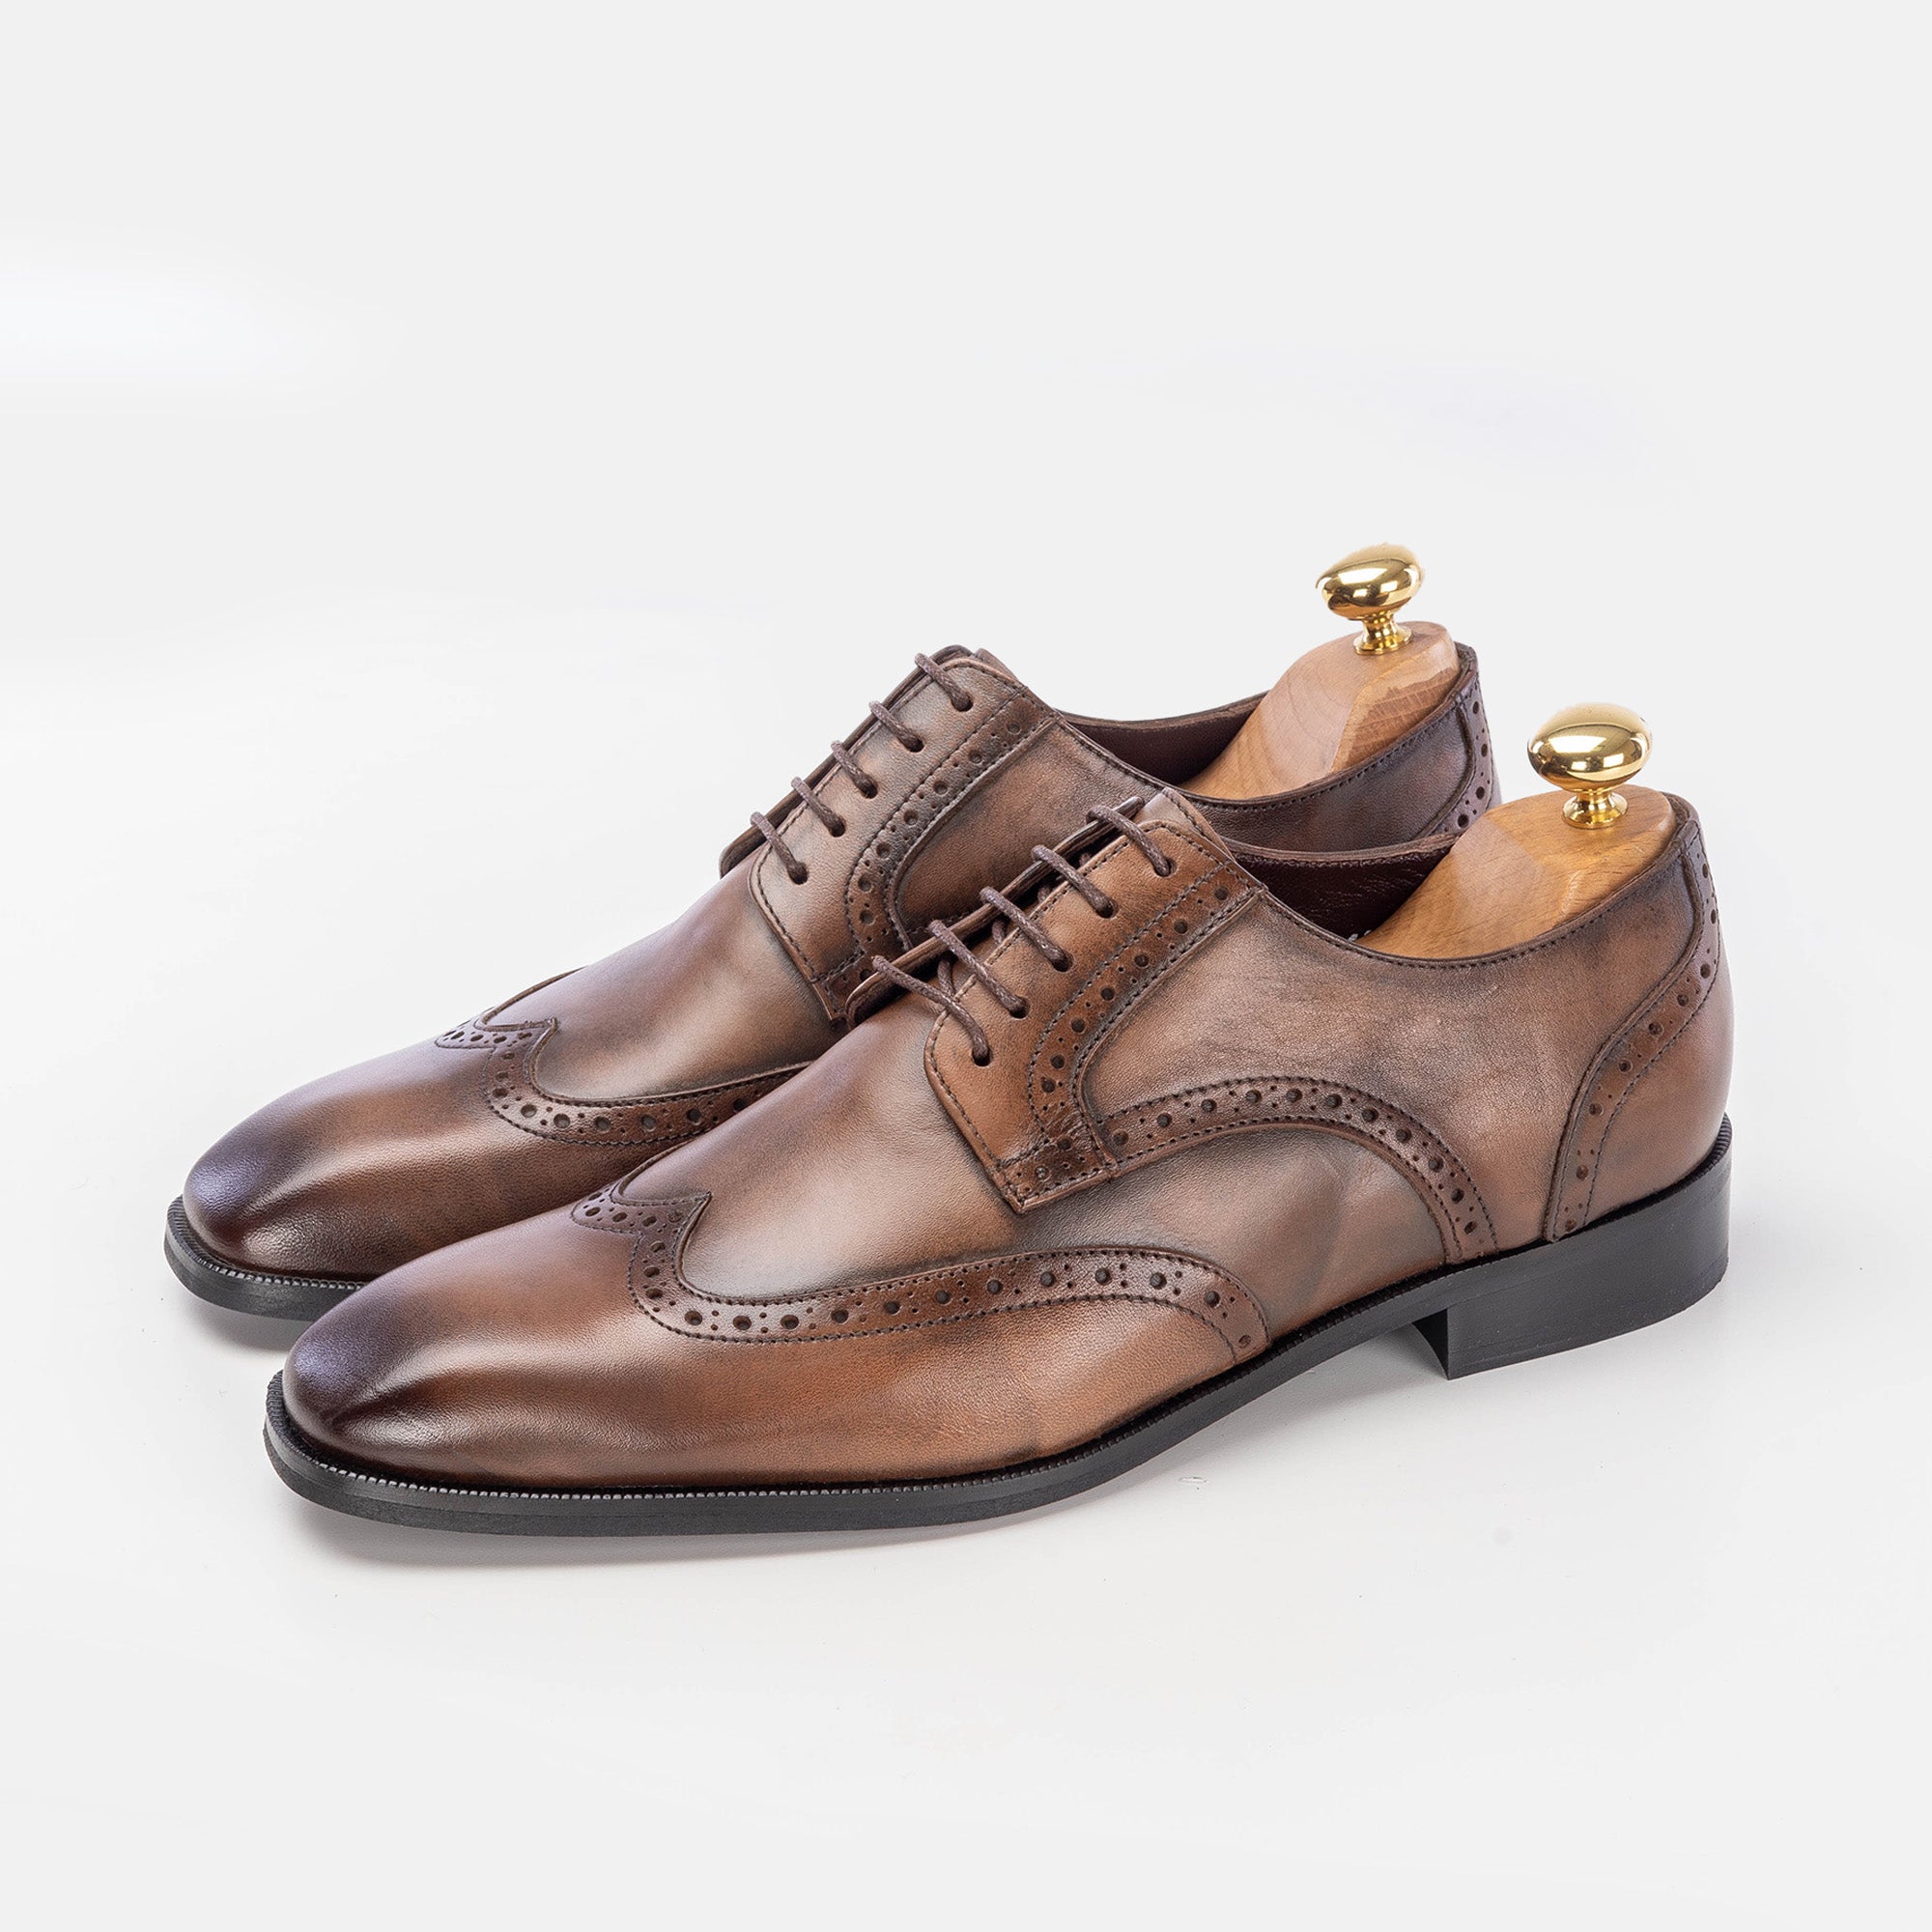 '1304 Chaussure en cuir Marron vintage